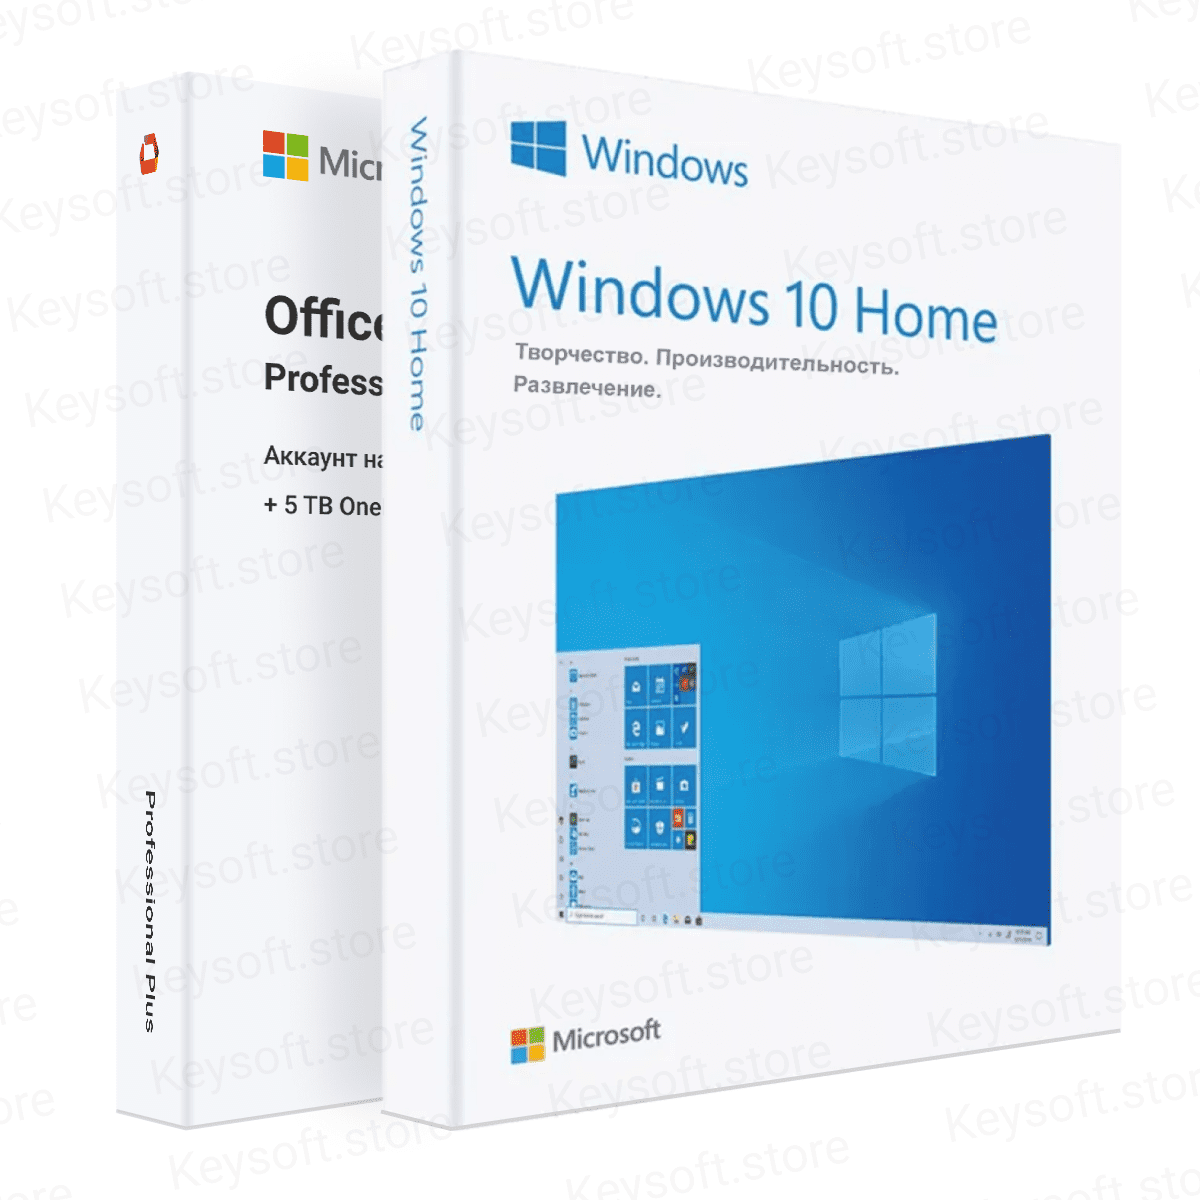 Windows 10 Home + Office 365